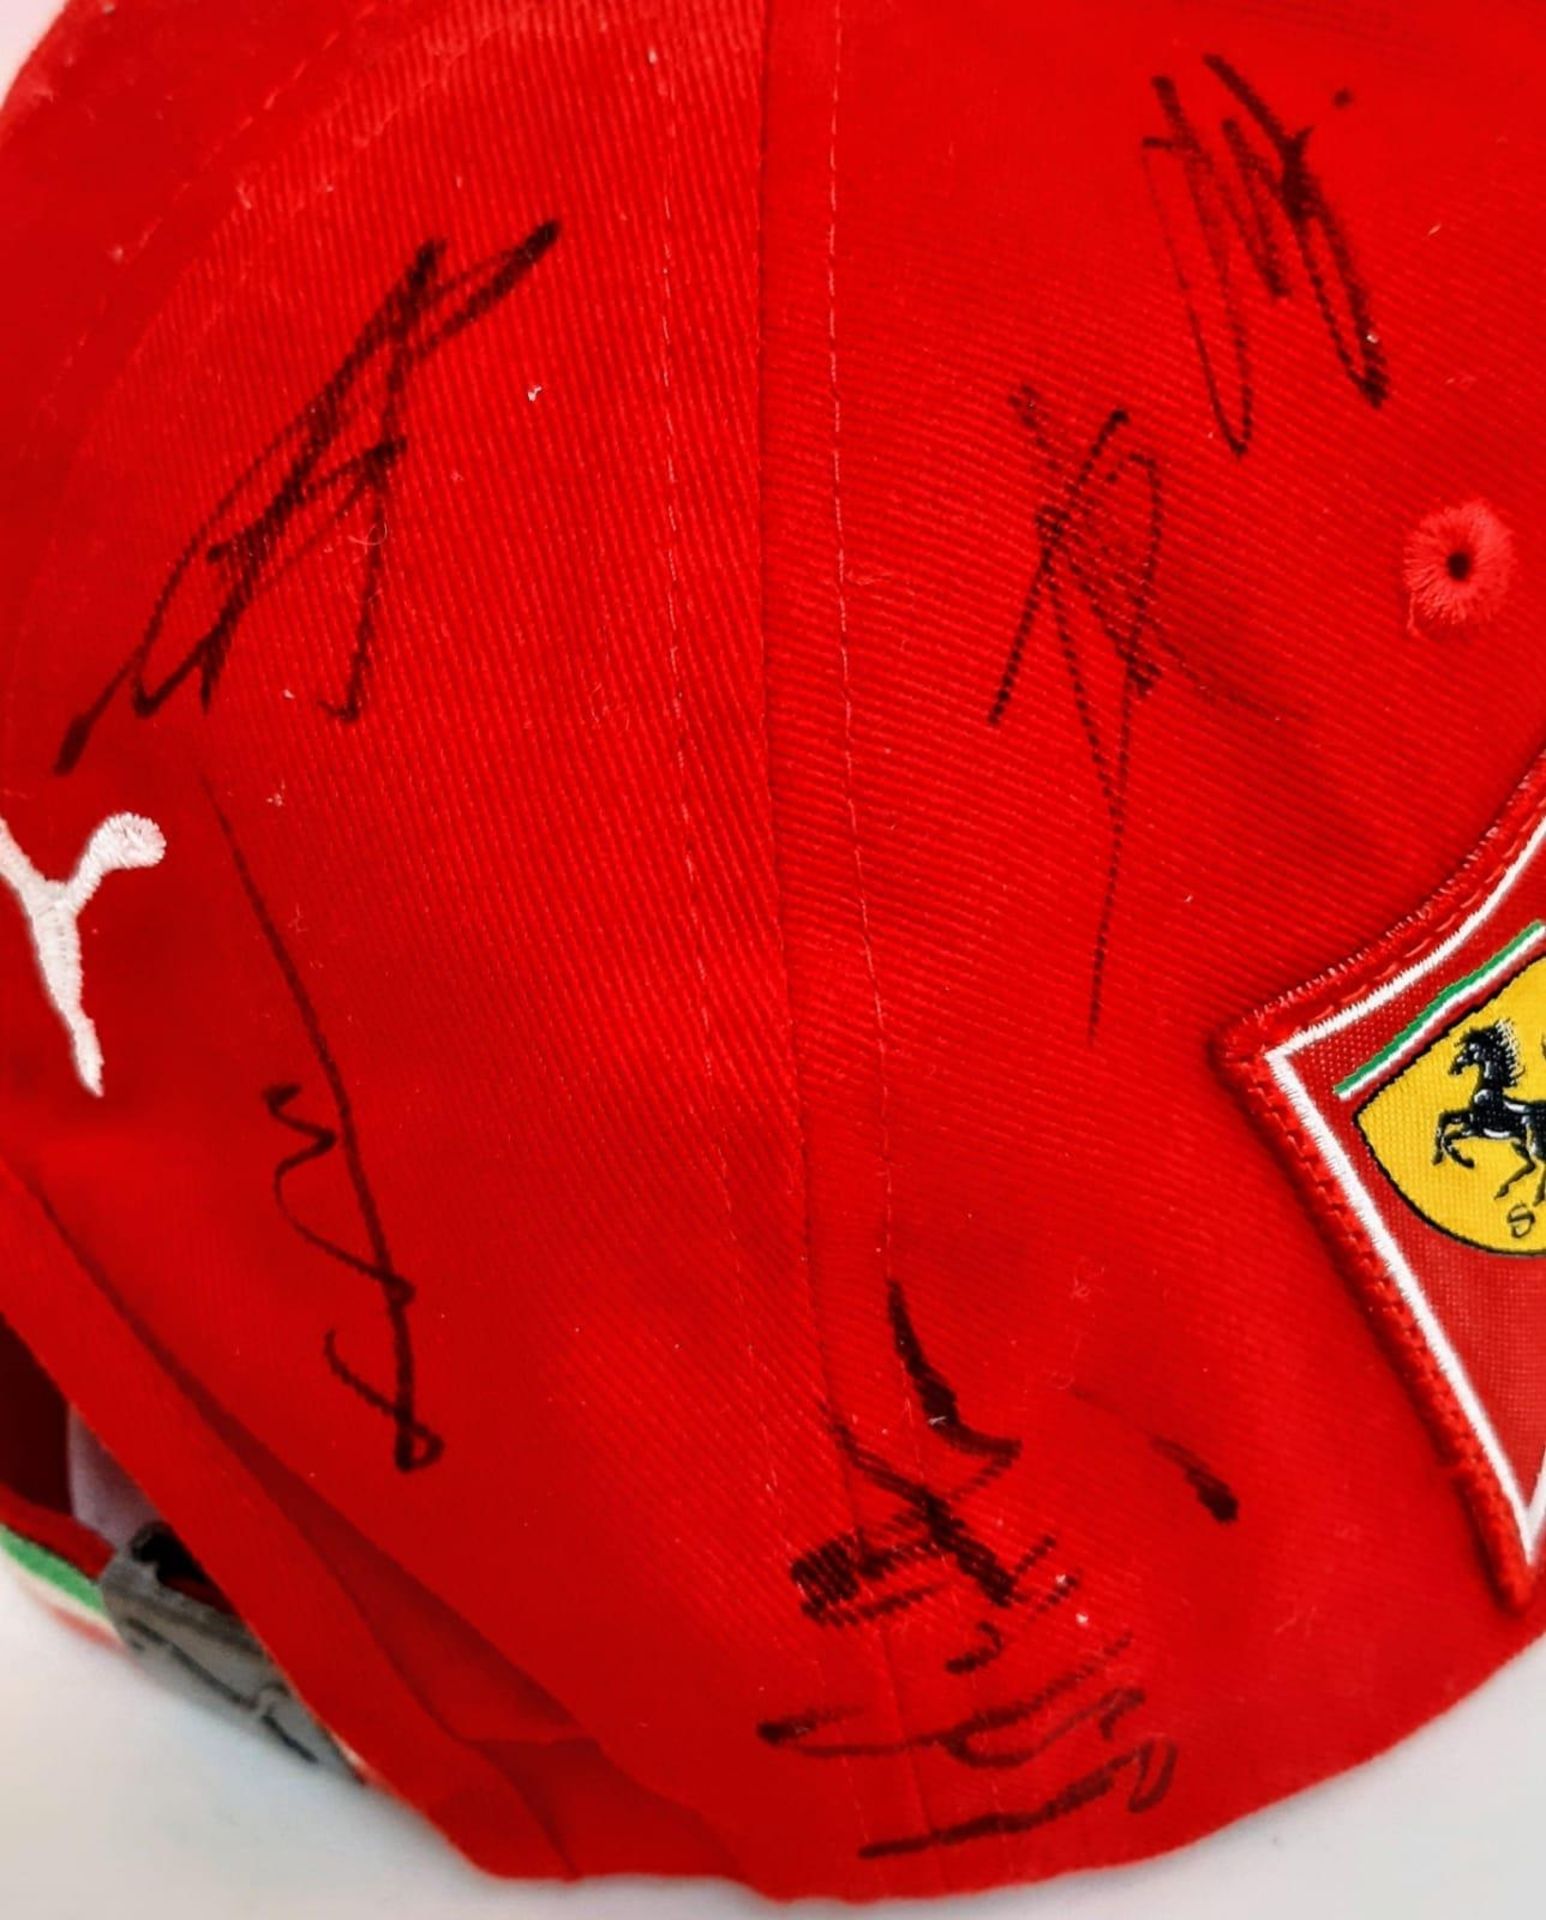 An Official Ferrari Team Cap - Over 20 signatures including Ferrari drivers and team principals. - Image 11 of 14